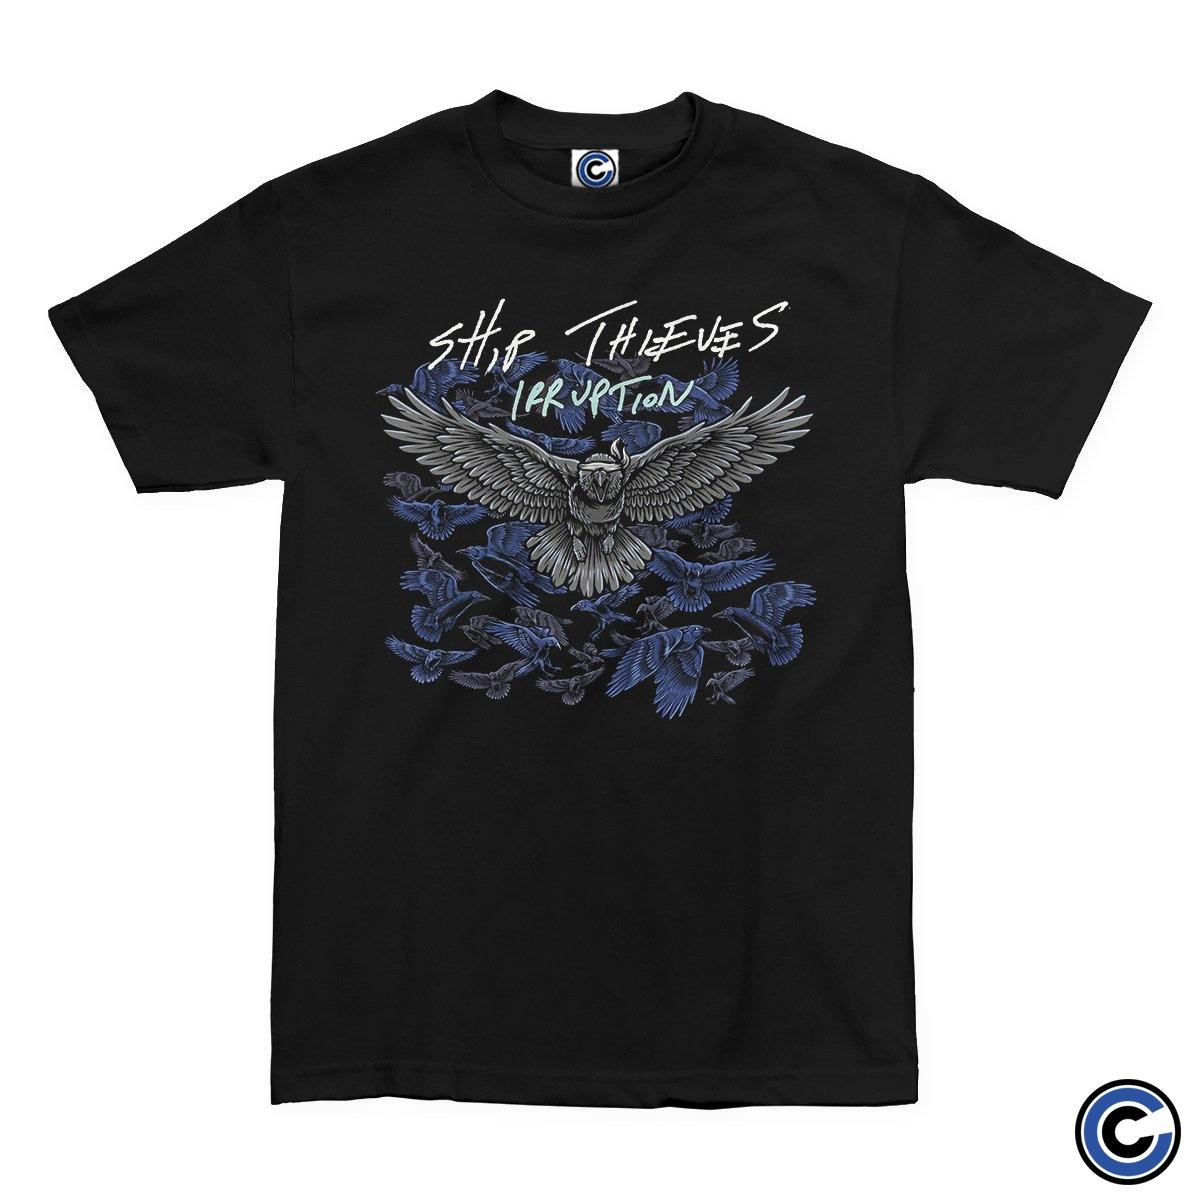 Buy – Ship Thieves "Bird" Shirt – Band & Music Merch – Cold Cuts Merch